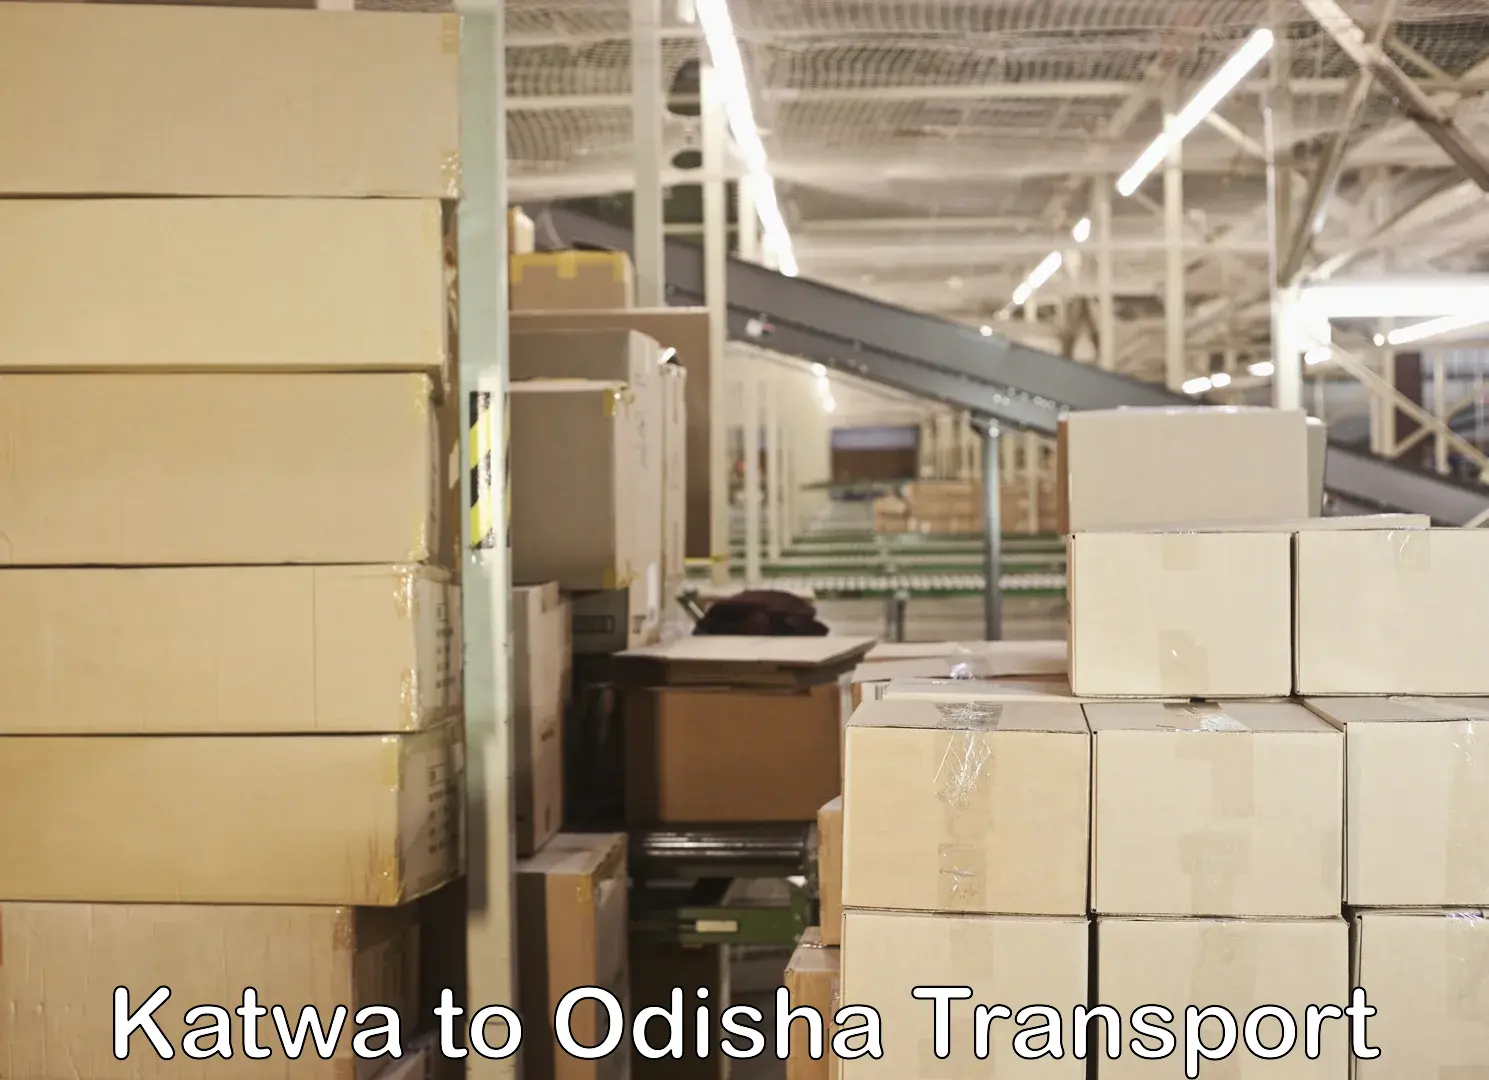 Truck transport companies in India Katwa to Pottangi